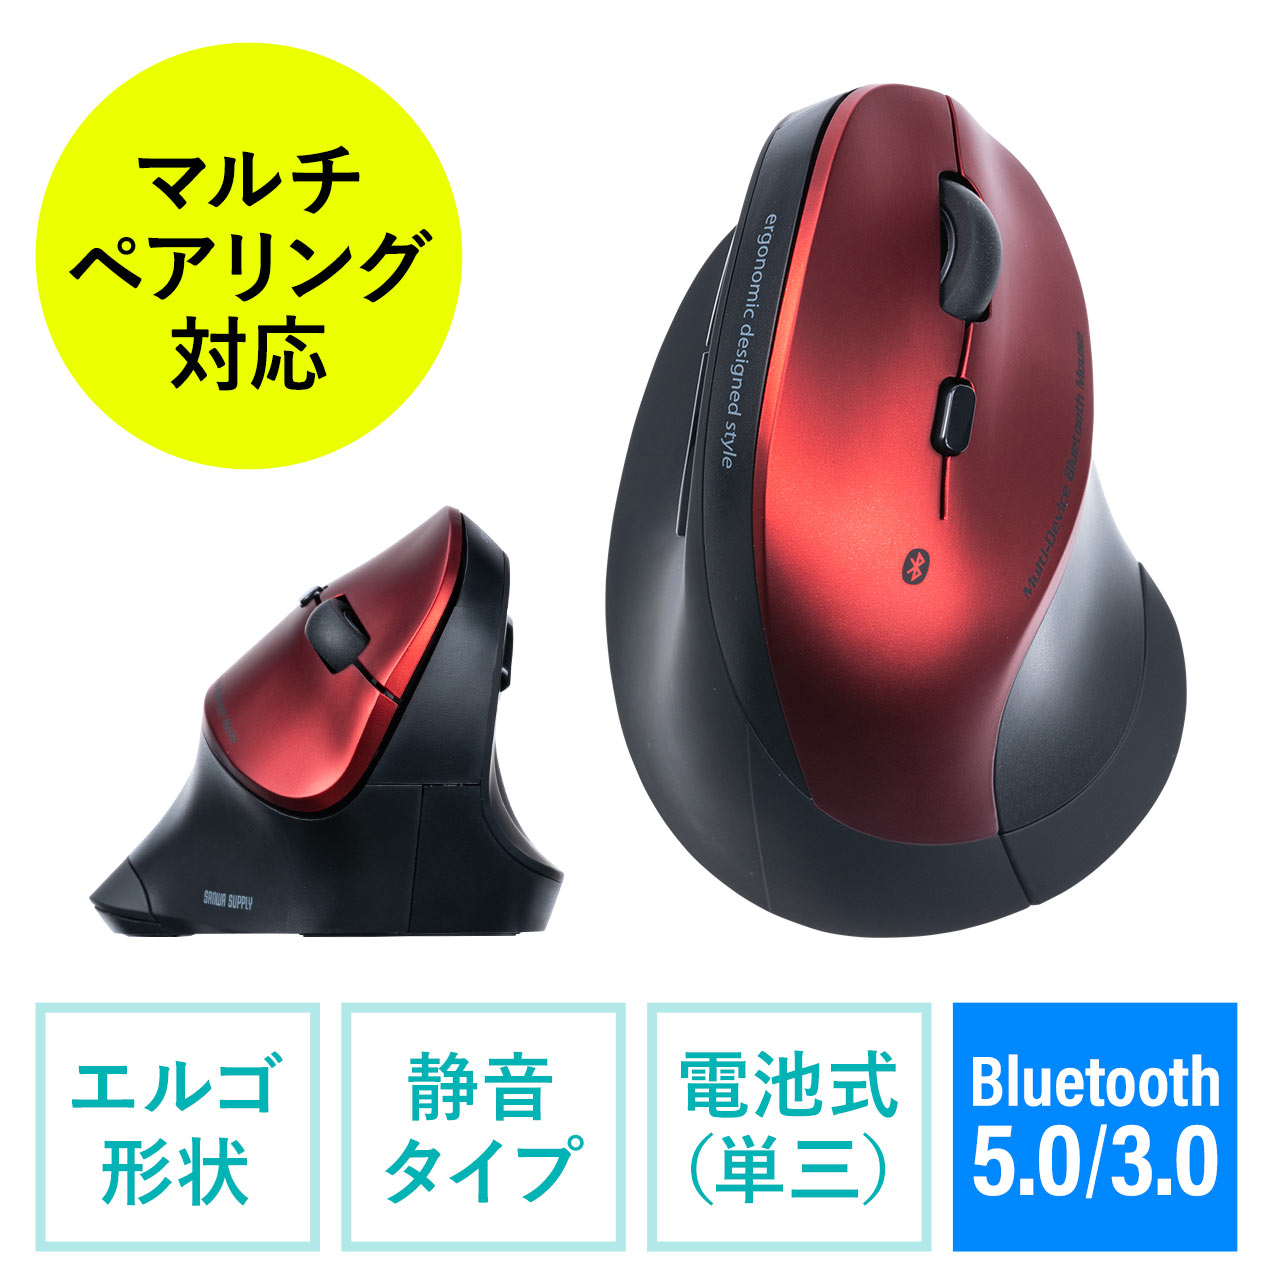 Bluetoothエルゴマウス 静音ボタン 乾電池式 マルチペアリング